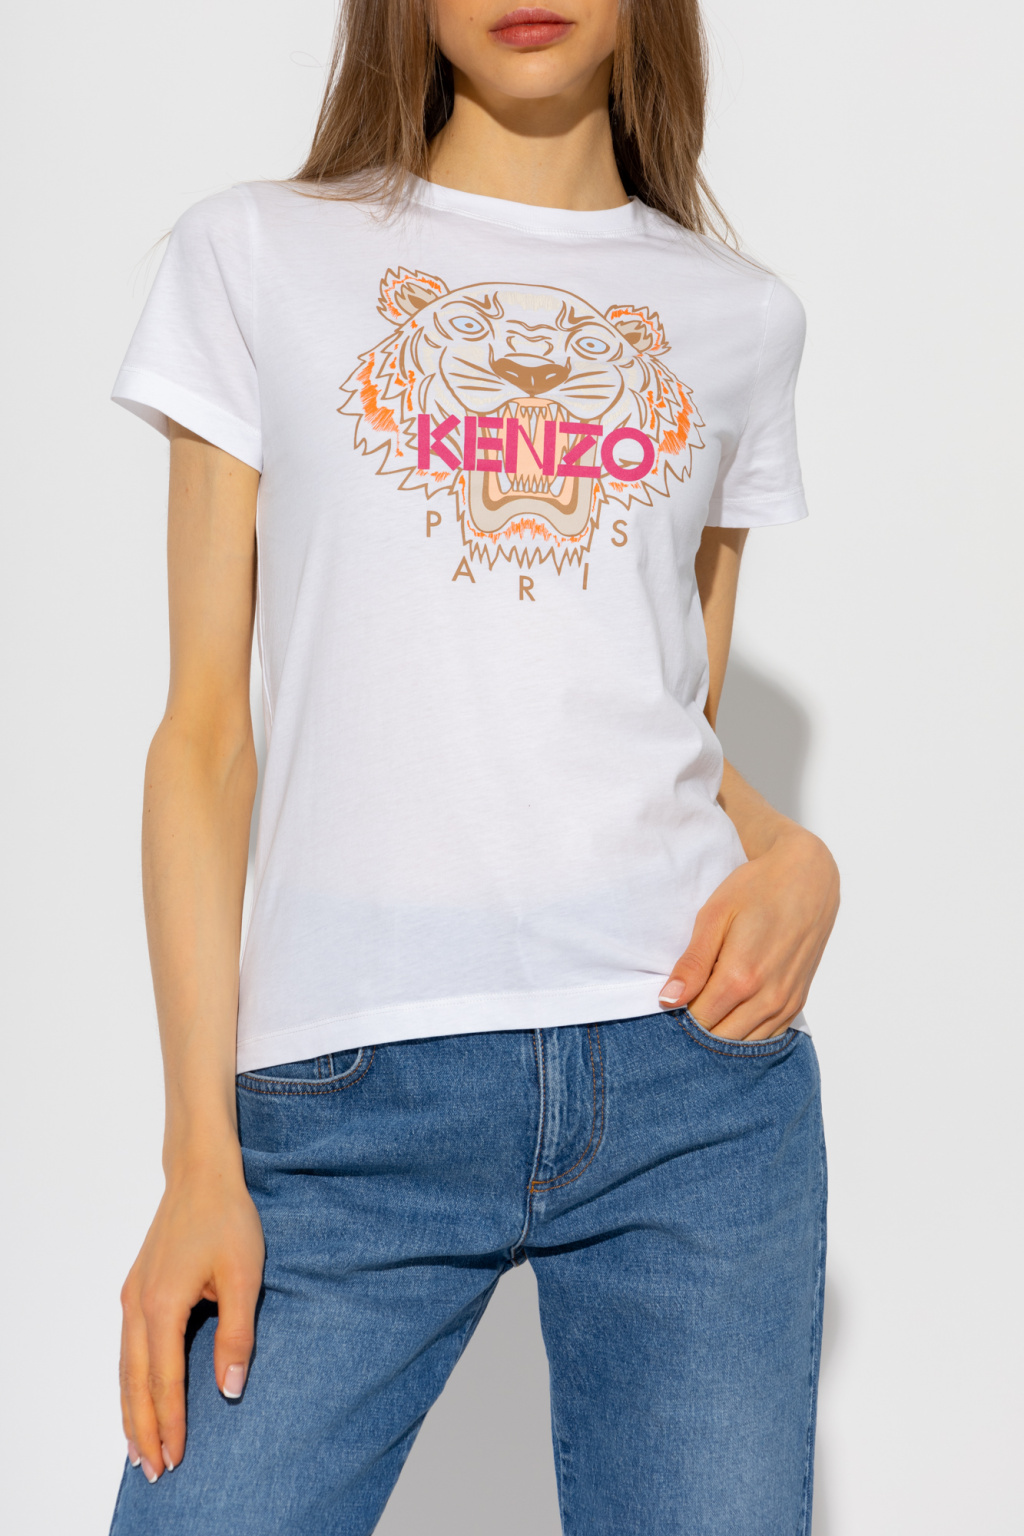 Kenzo gazman clothing shirts polos